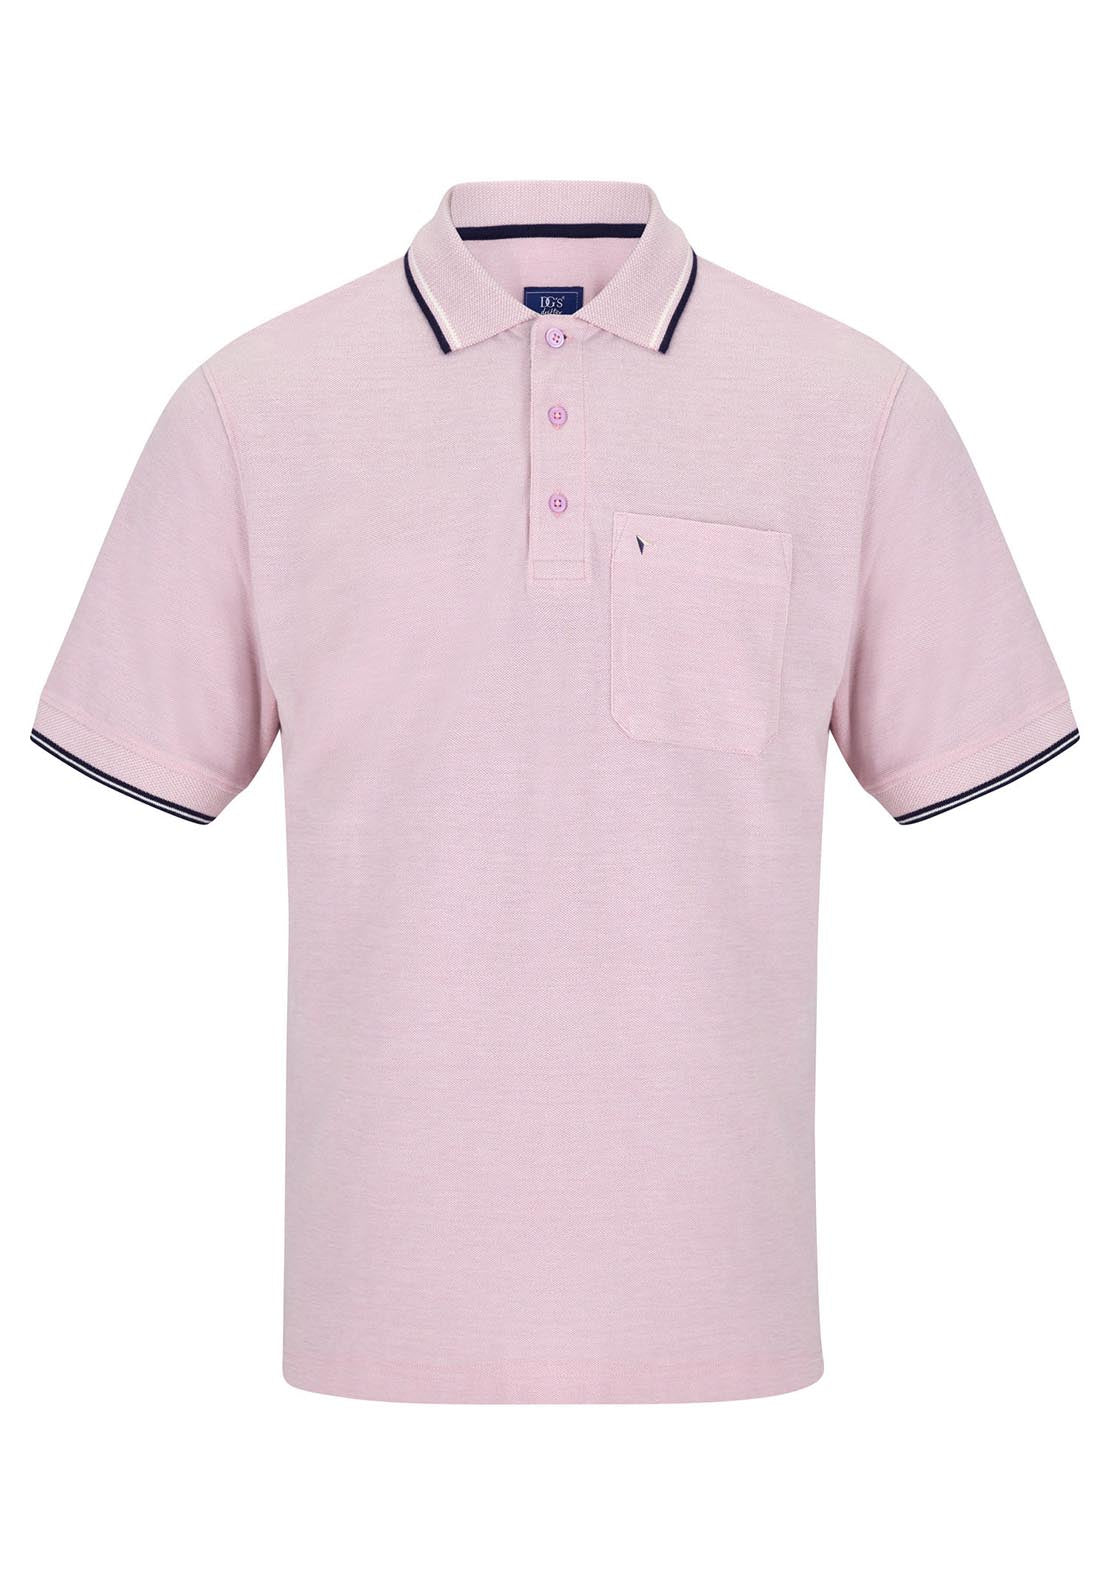 Drifter Short Sleeve Plain Polo - Pink 1 Shaws Department Stores